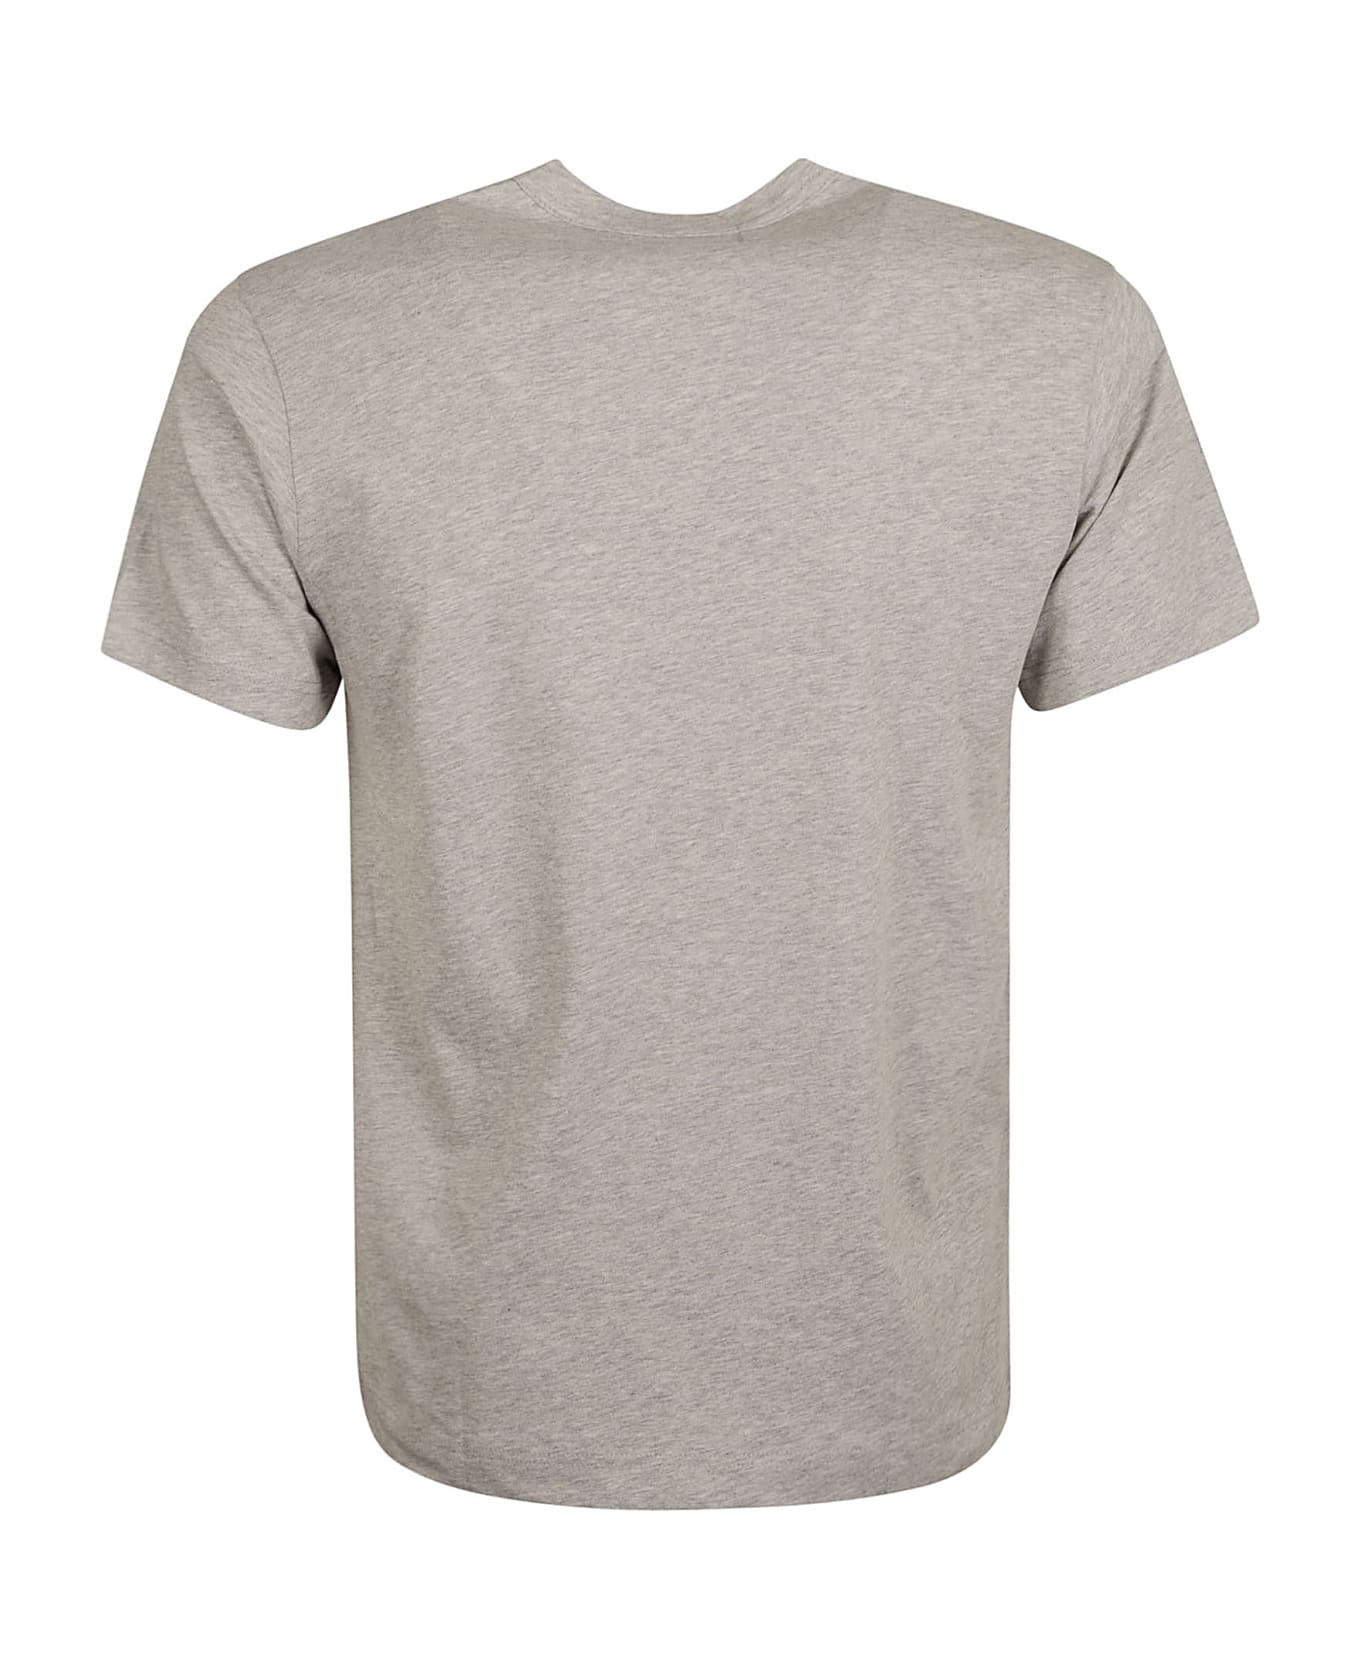 Comme des Garçons Shirt Multi Croco Print Regular T-shirt - Top Grey